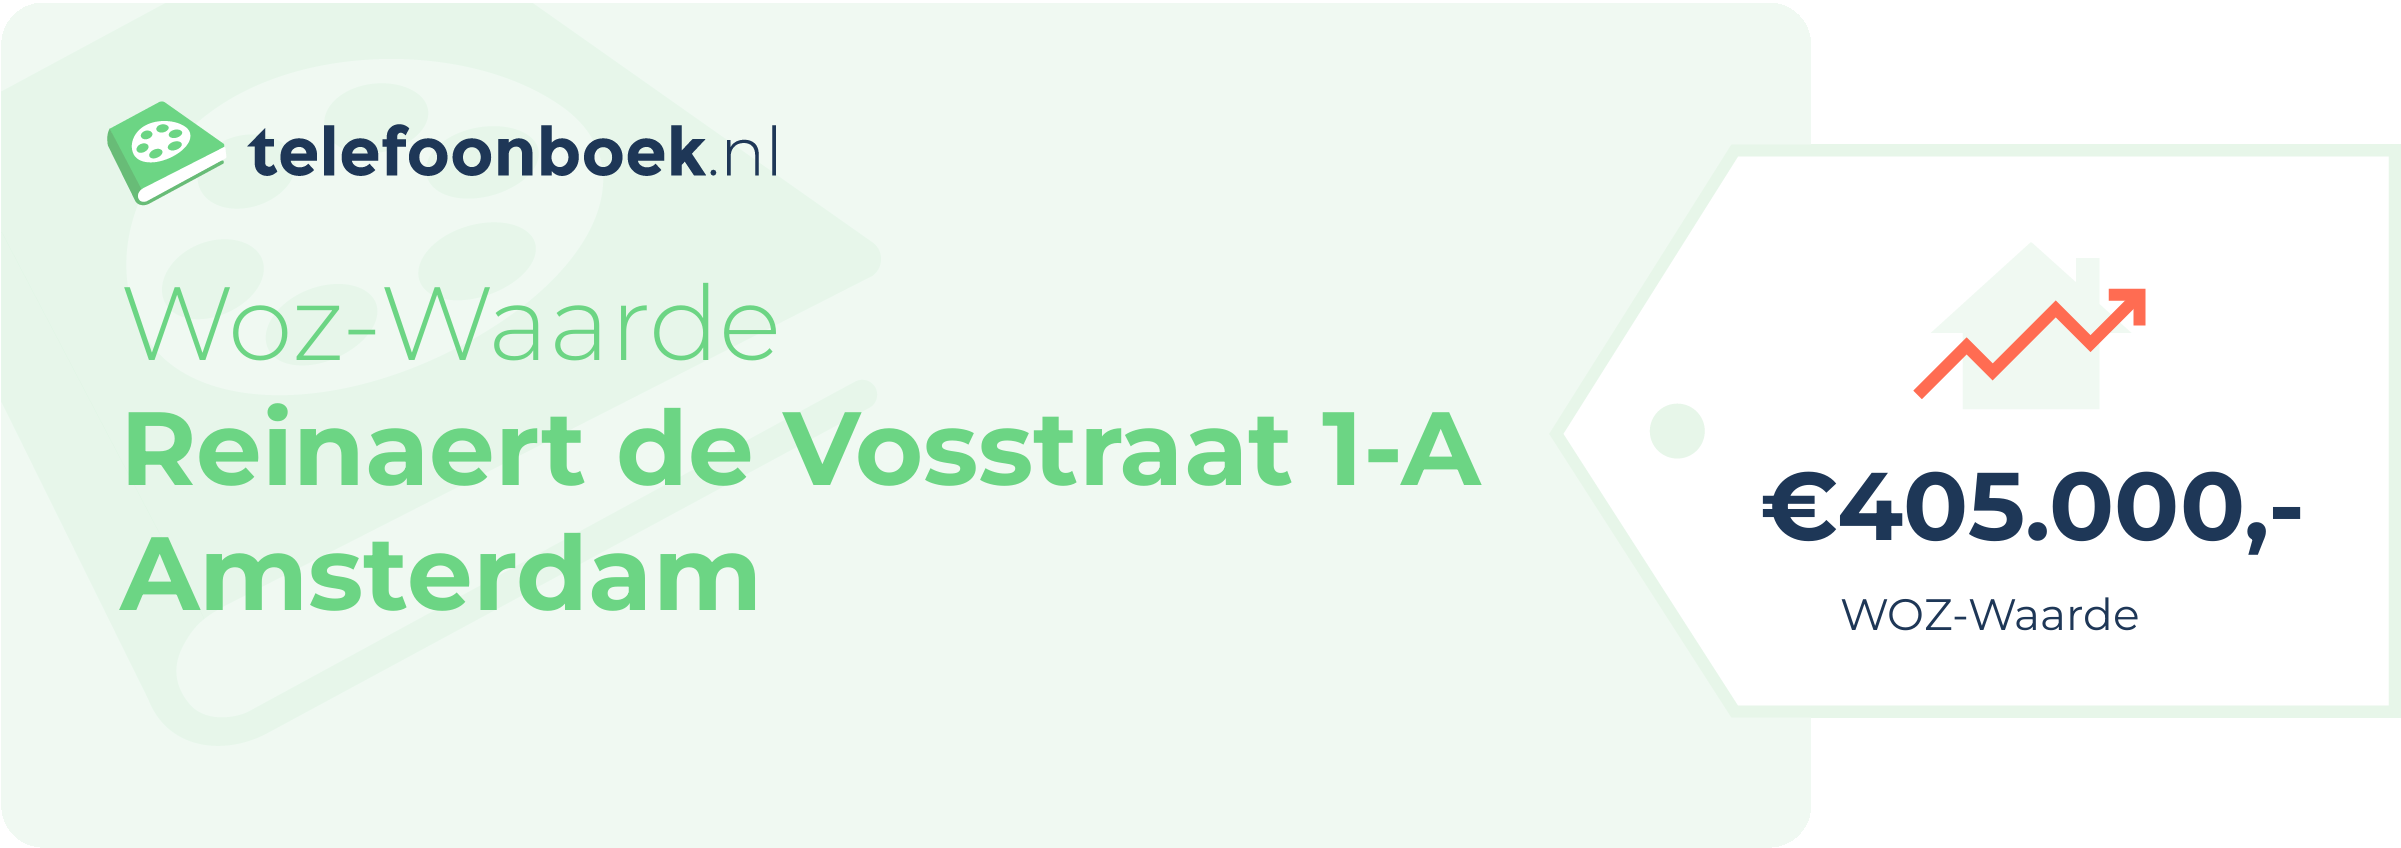 WOZ-waarde Reinaert De Vosstraat 1-A Amsterdam